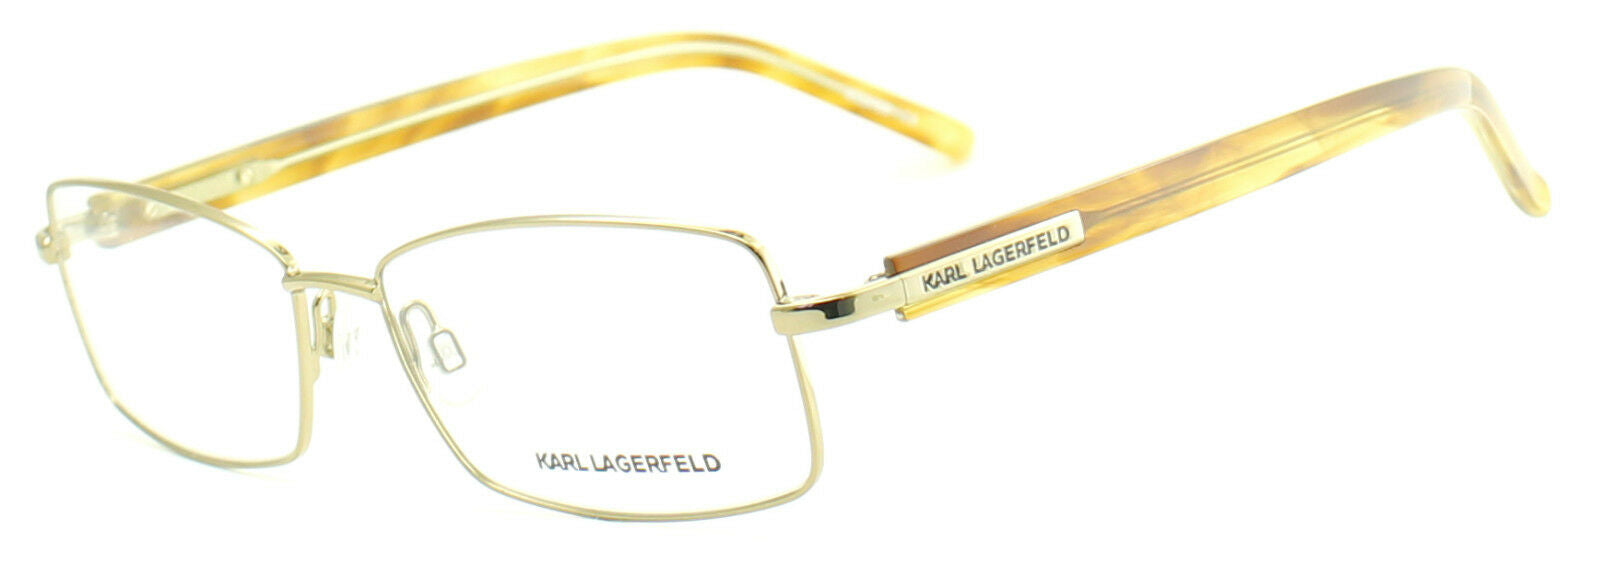 KARL LAGERFELD KL04 25663945 54mm Eyewear FRAMES RX Optical Glasses Eyeglasses